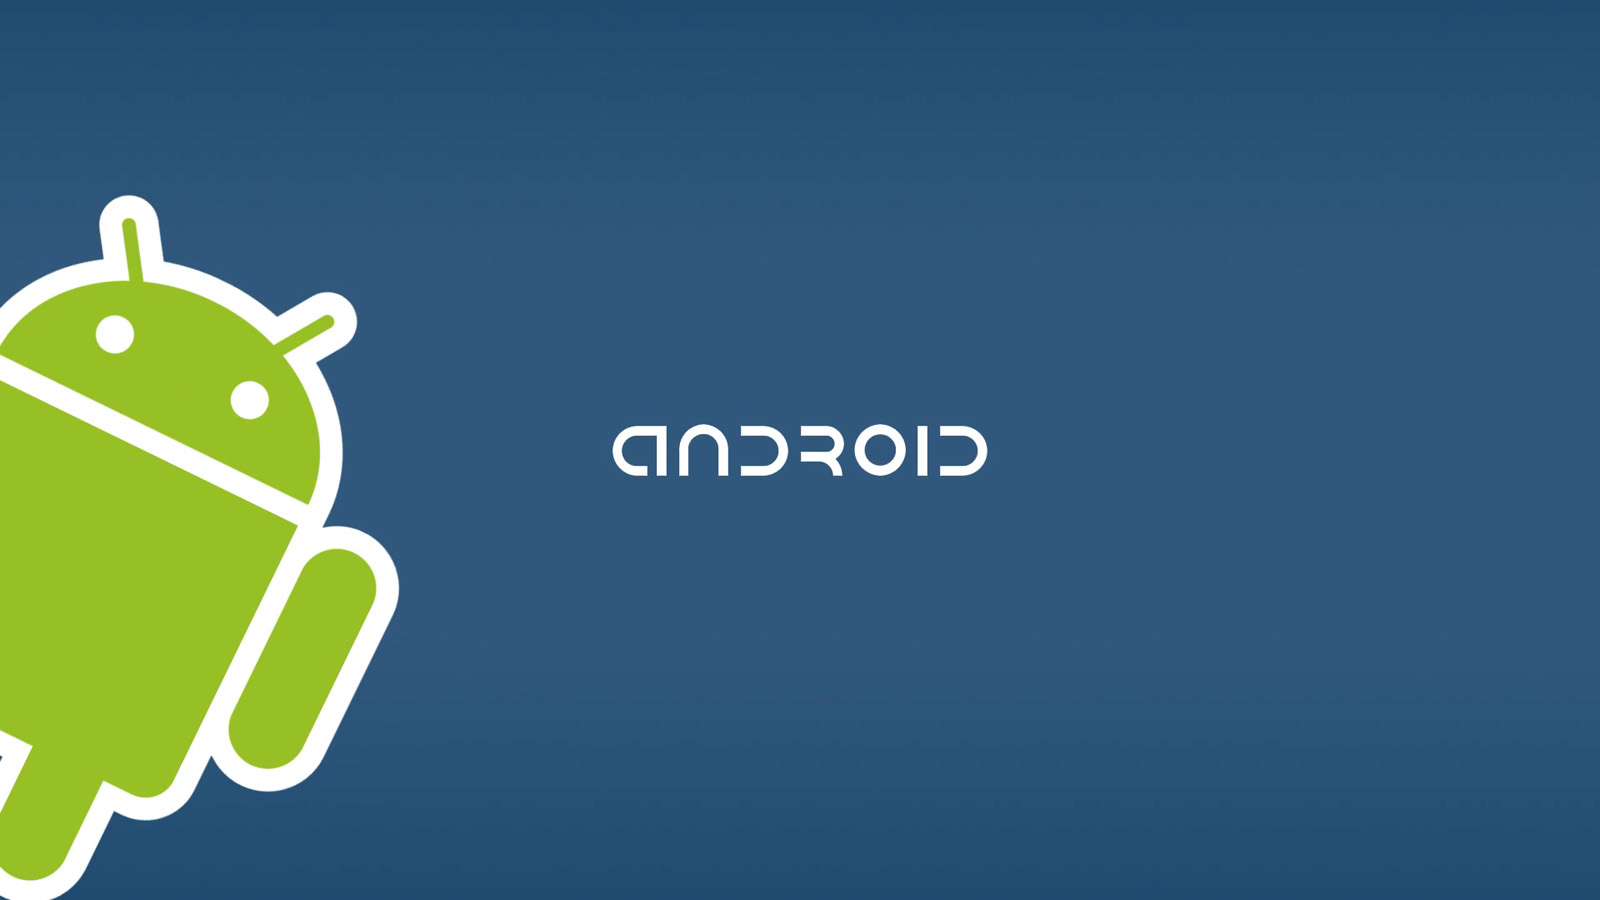 Android s android t. Логотип андроид. Андро. Операционная система андроид. ОС андроид логотип.